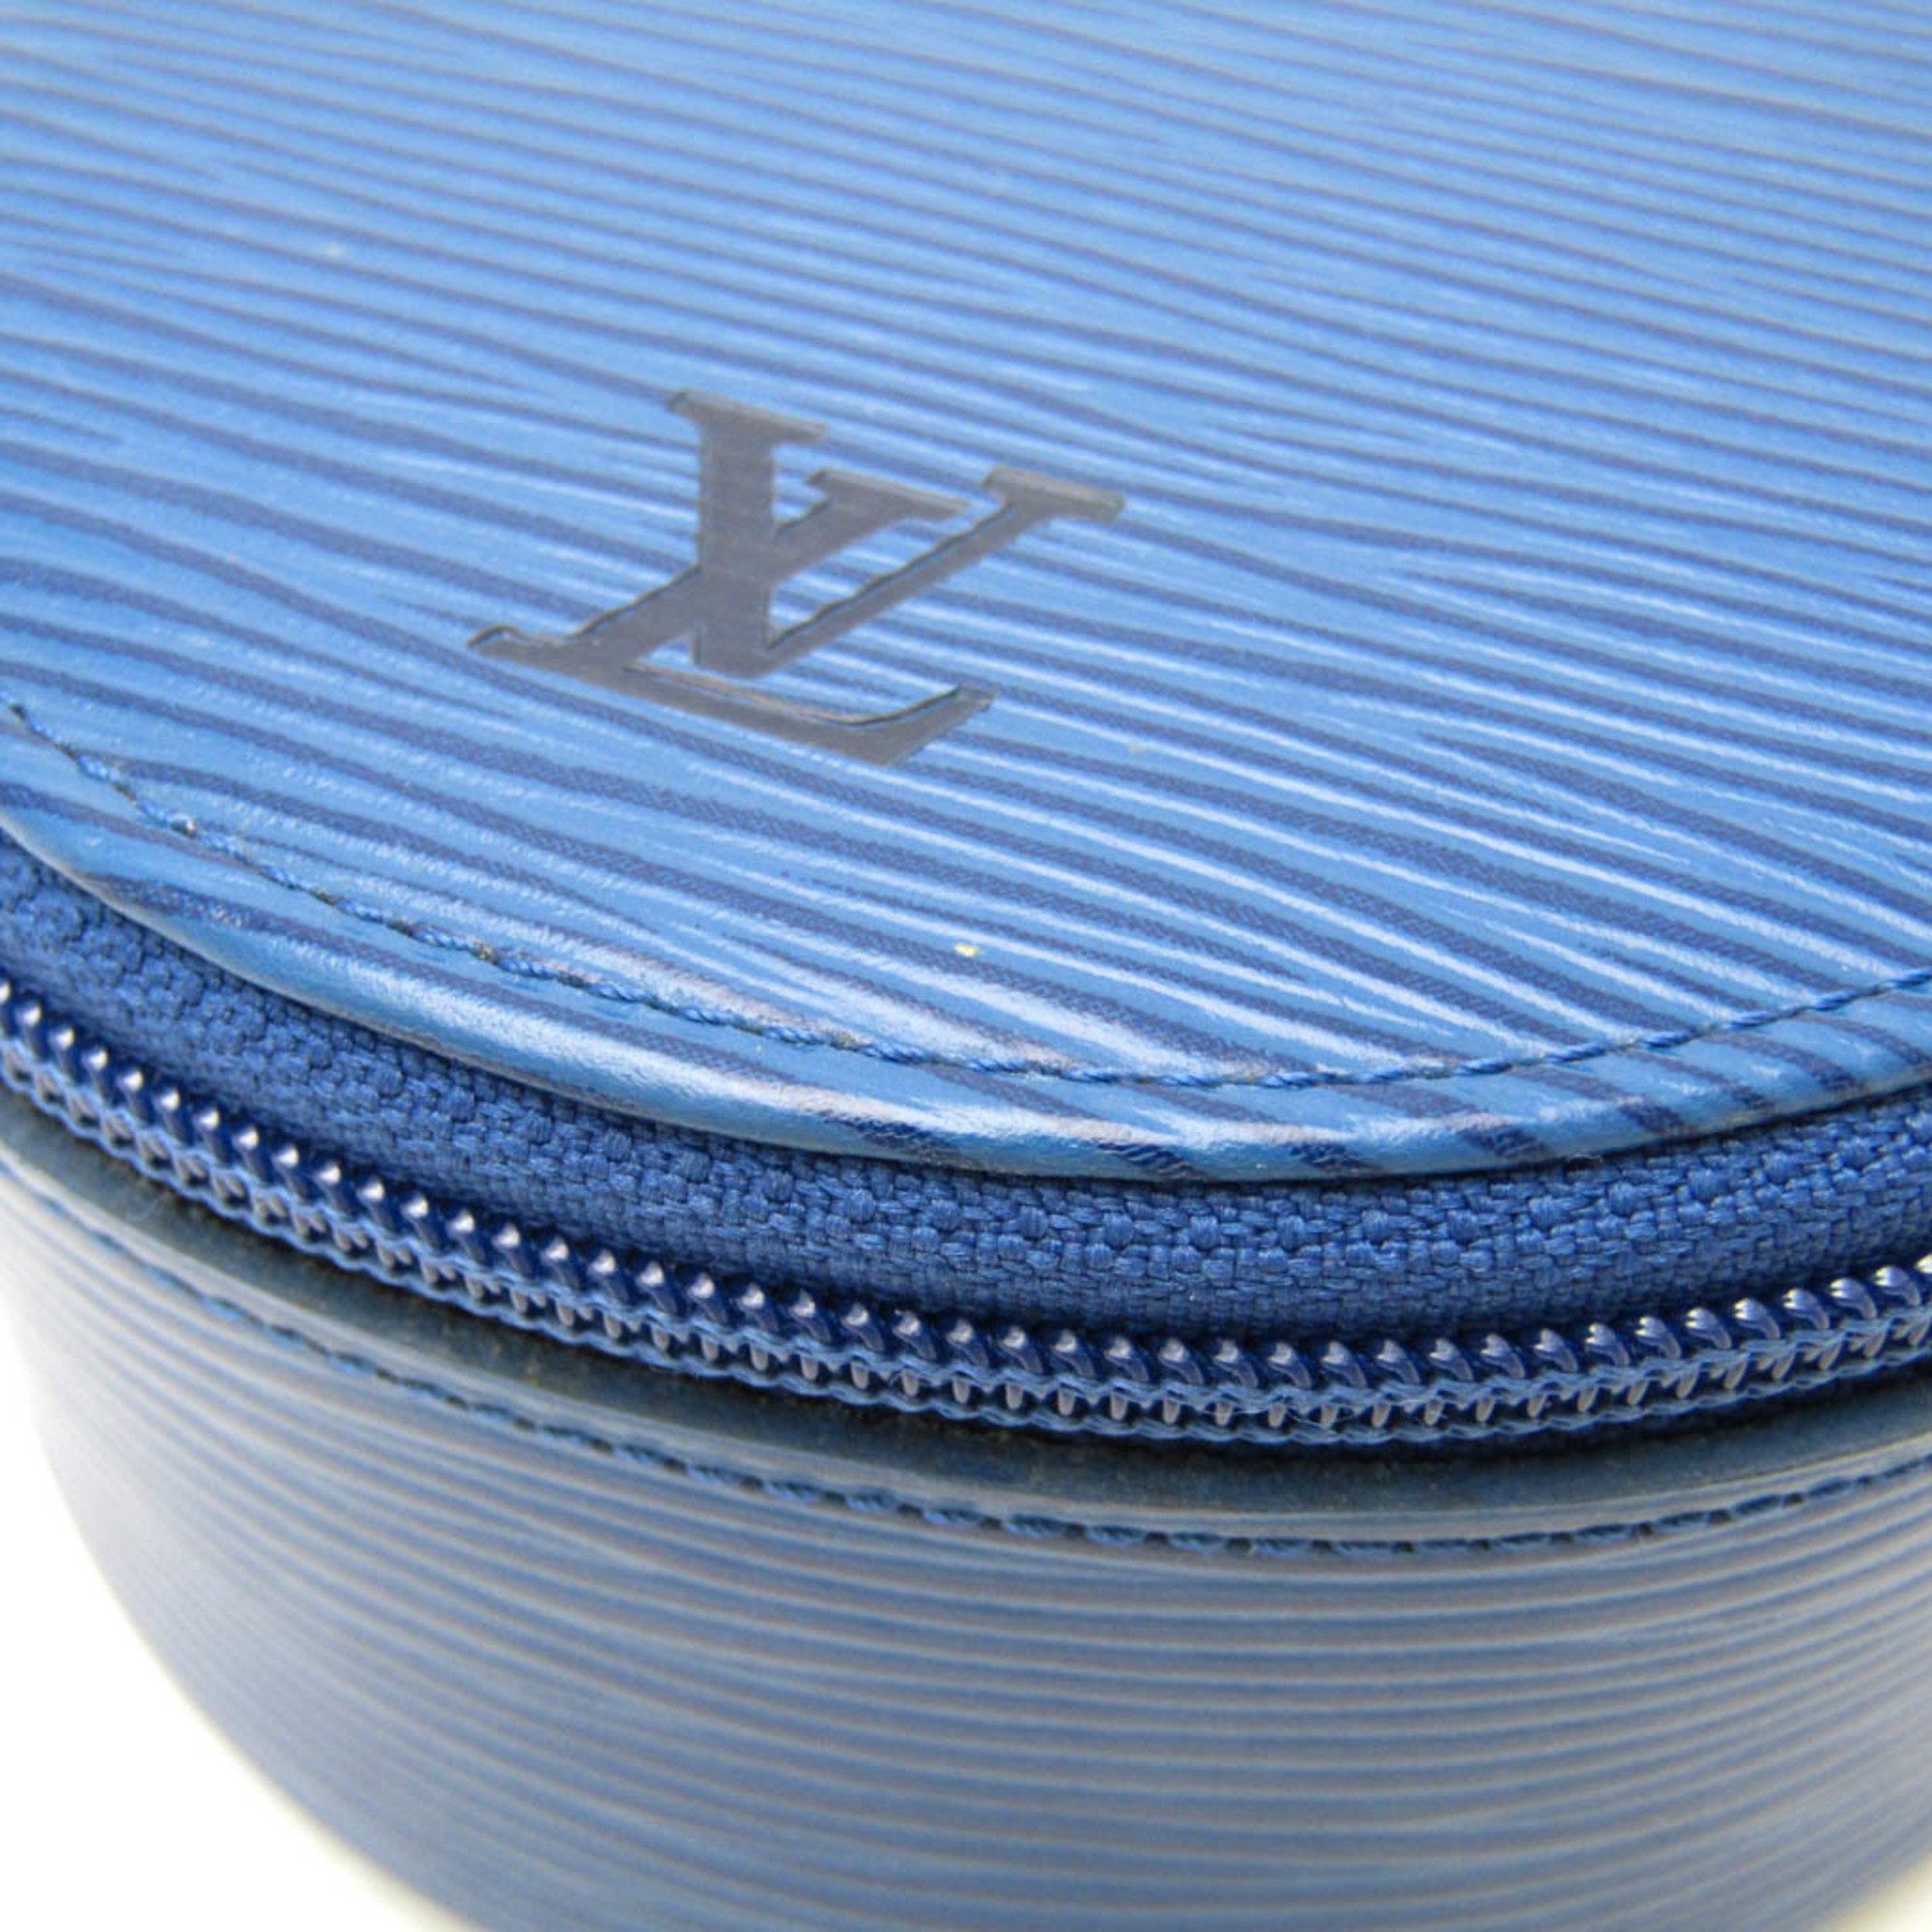 Louis Vuitton Epi Ecrin Bijoux 10 M48215 Jewelry Case Toledo Blue Epi Leather